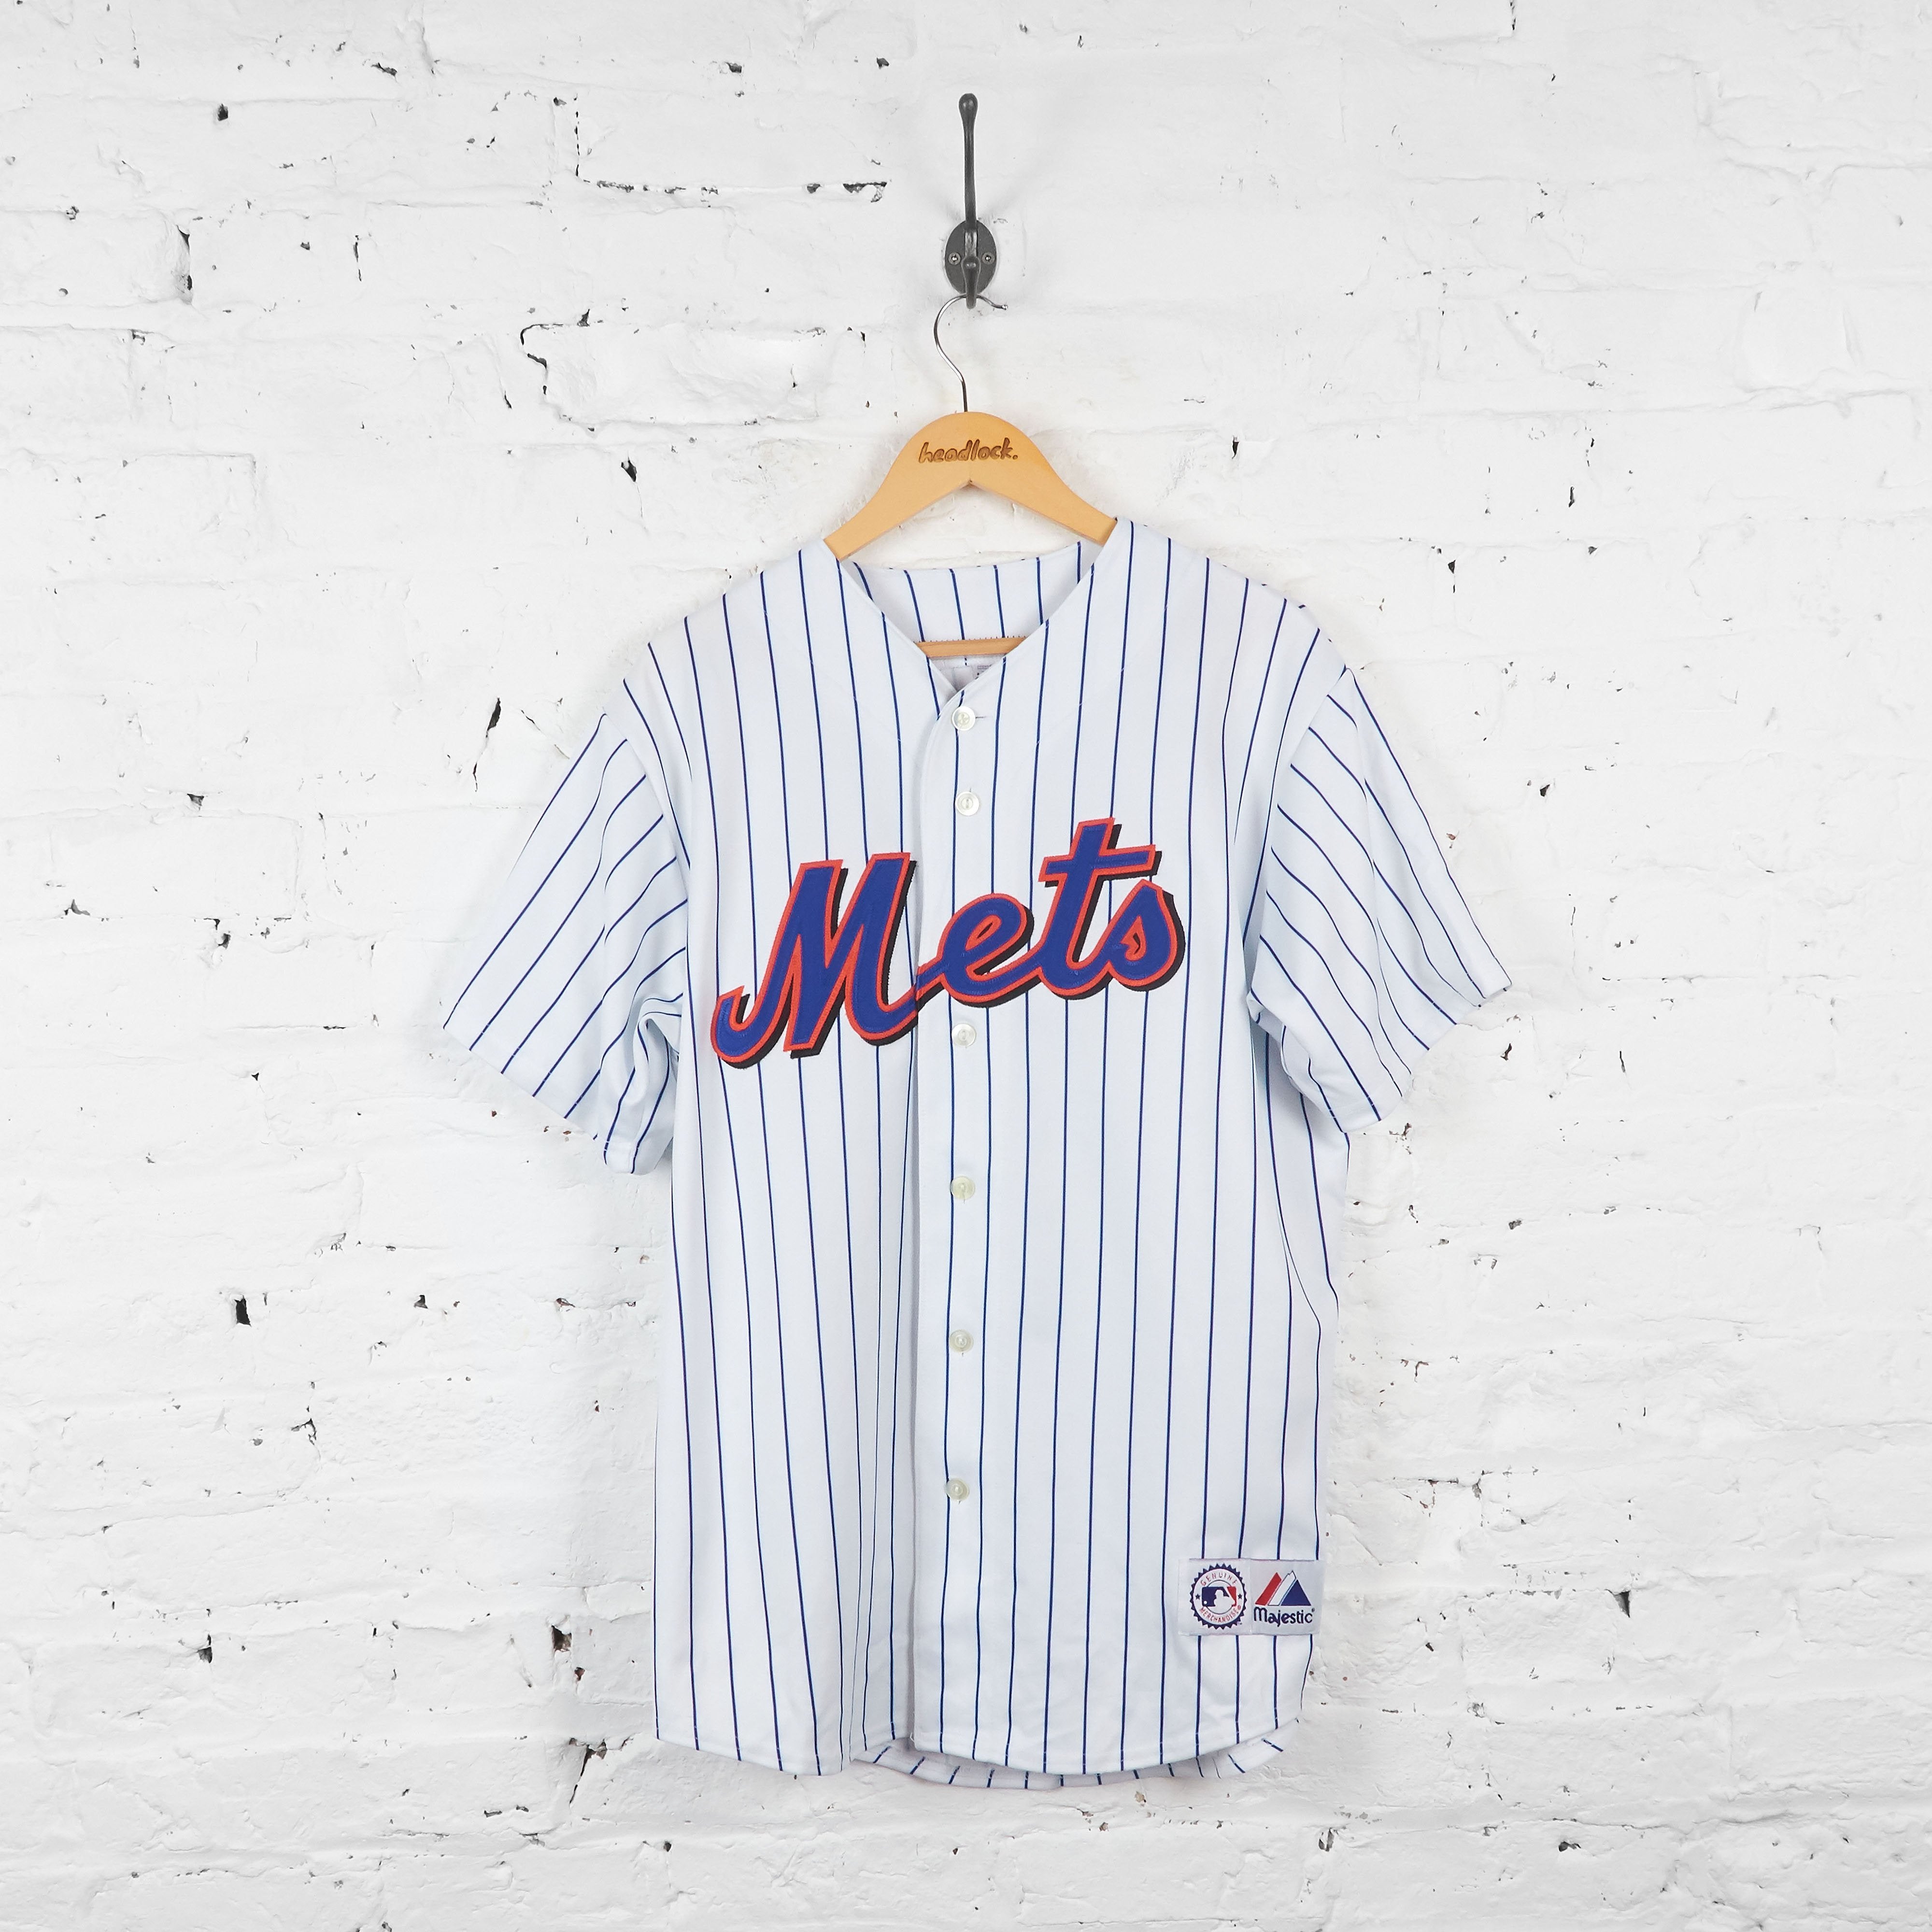 New York Mets Reyes 7 Signed Baseball Jersey Shirt - White - L